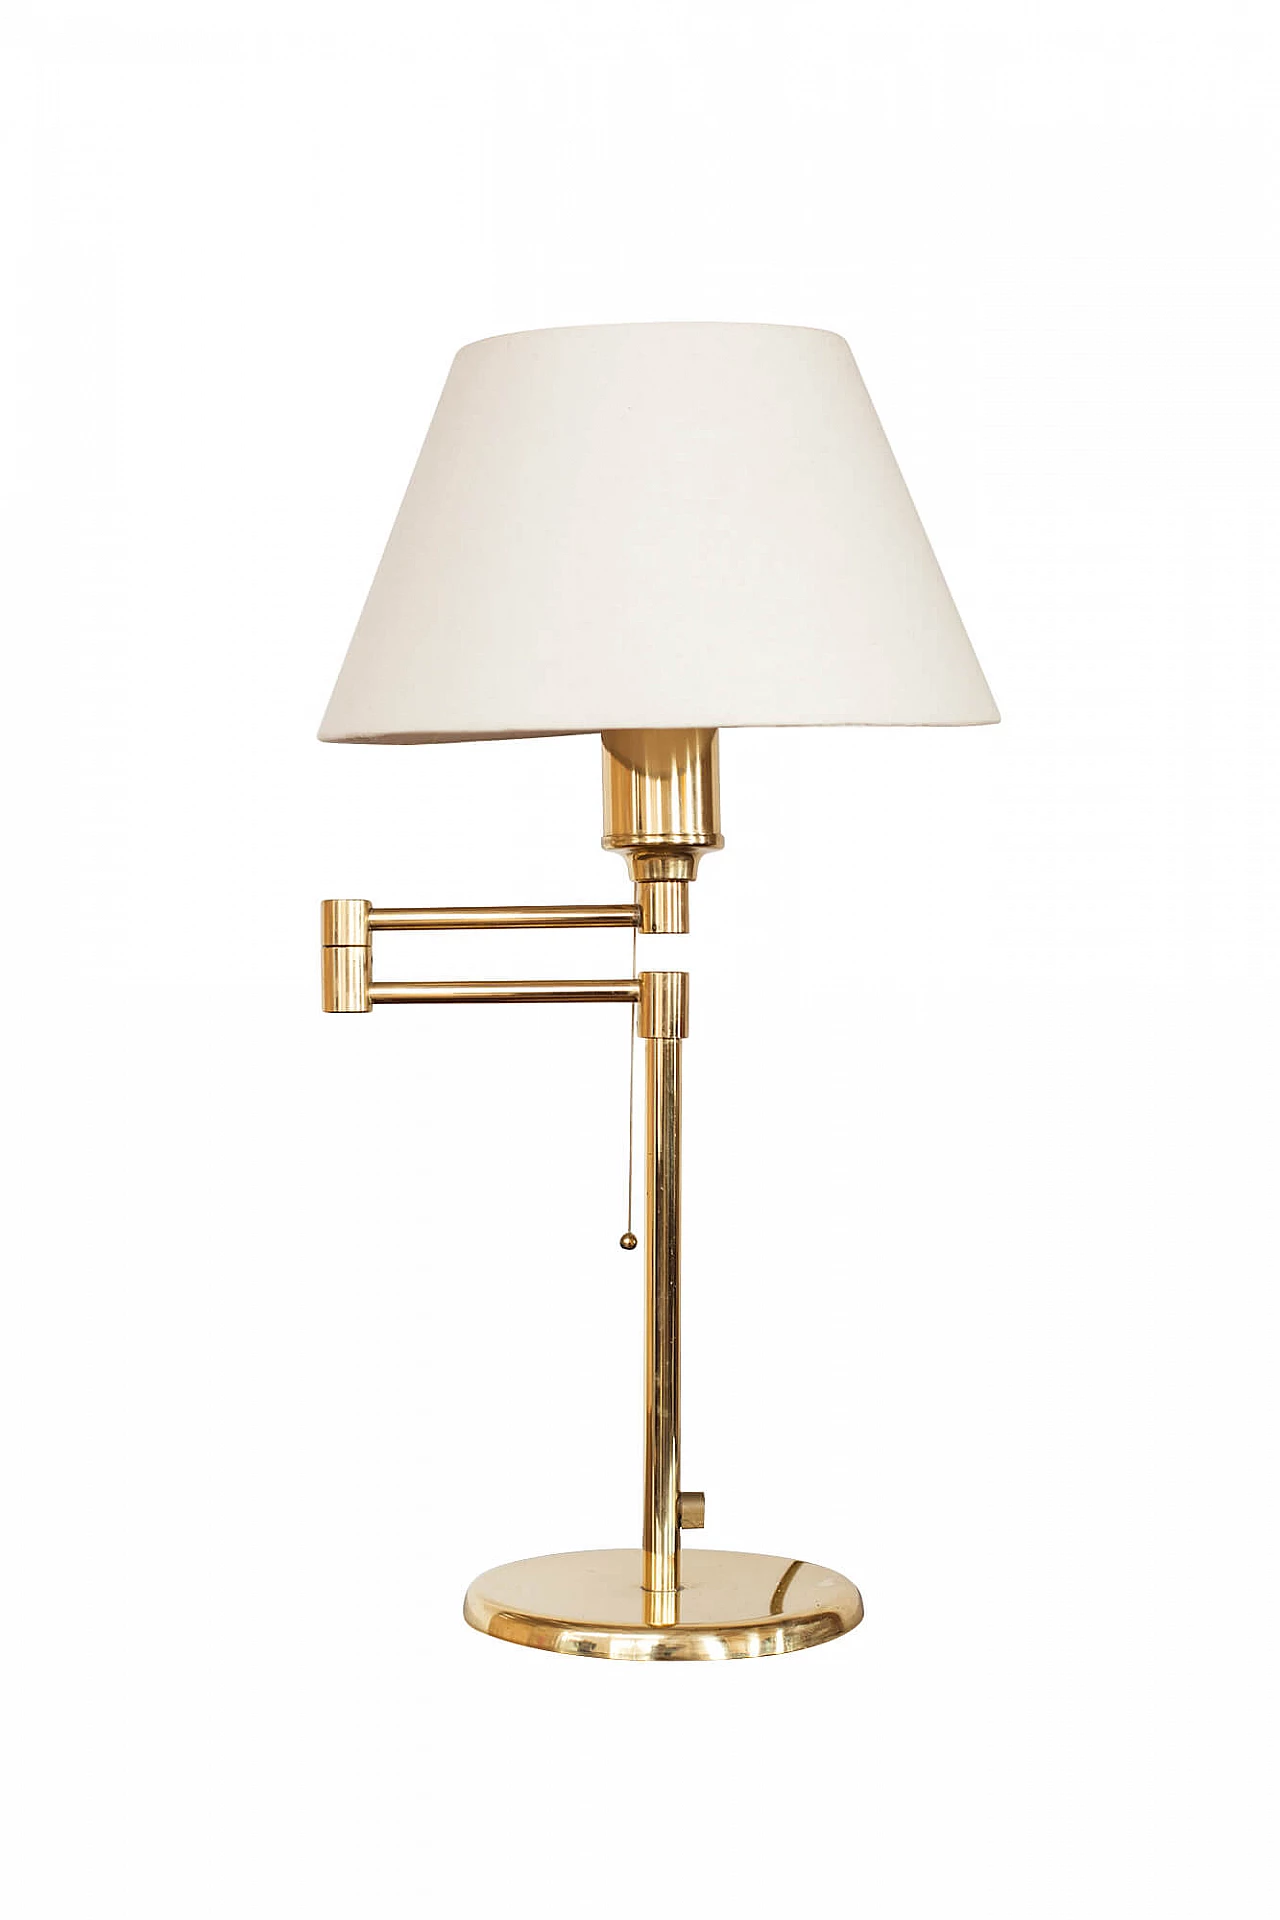 Brass table lamp by Egoluce, 80s 1326827